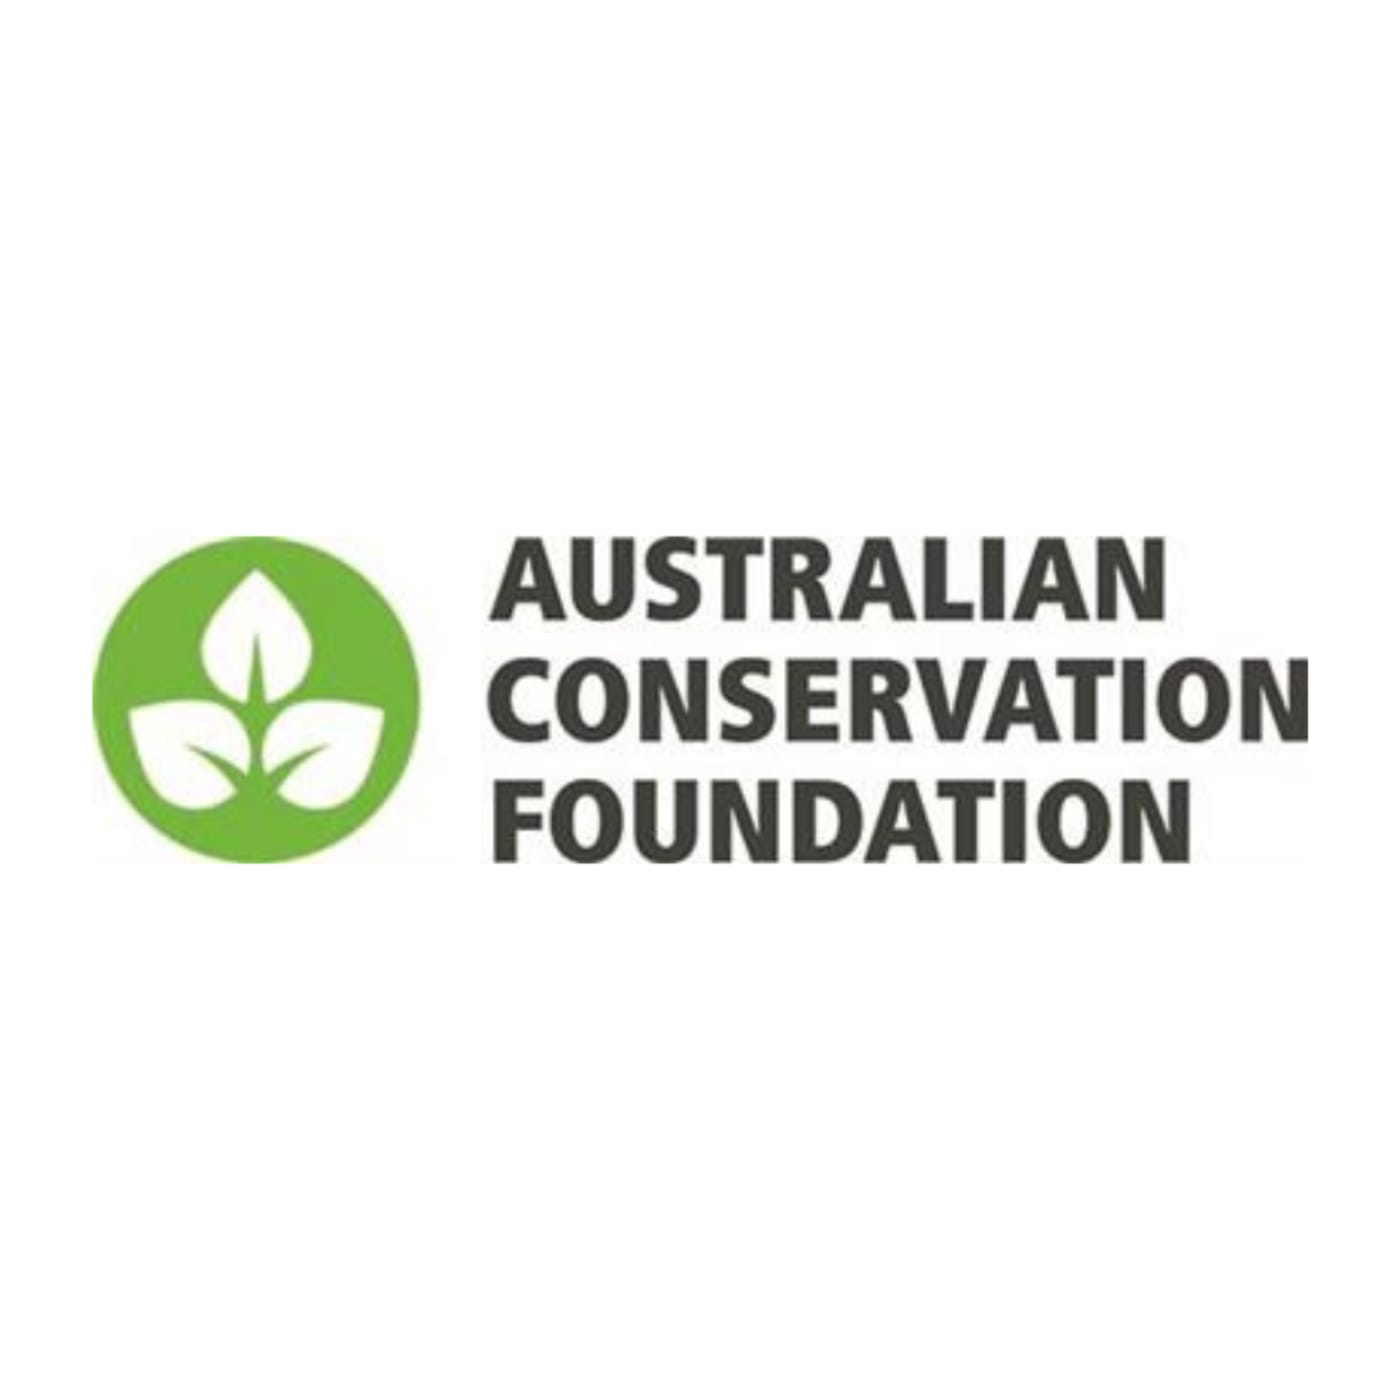 Australian Conservation Foundation logo